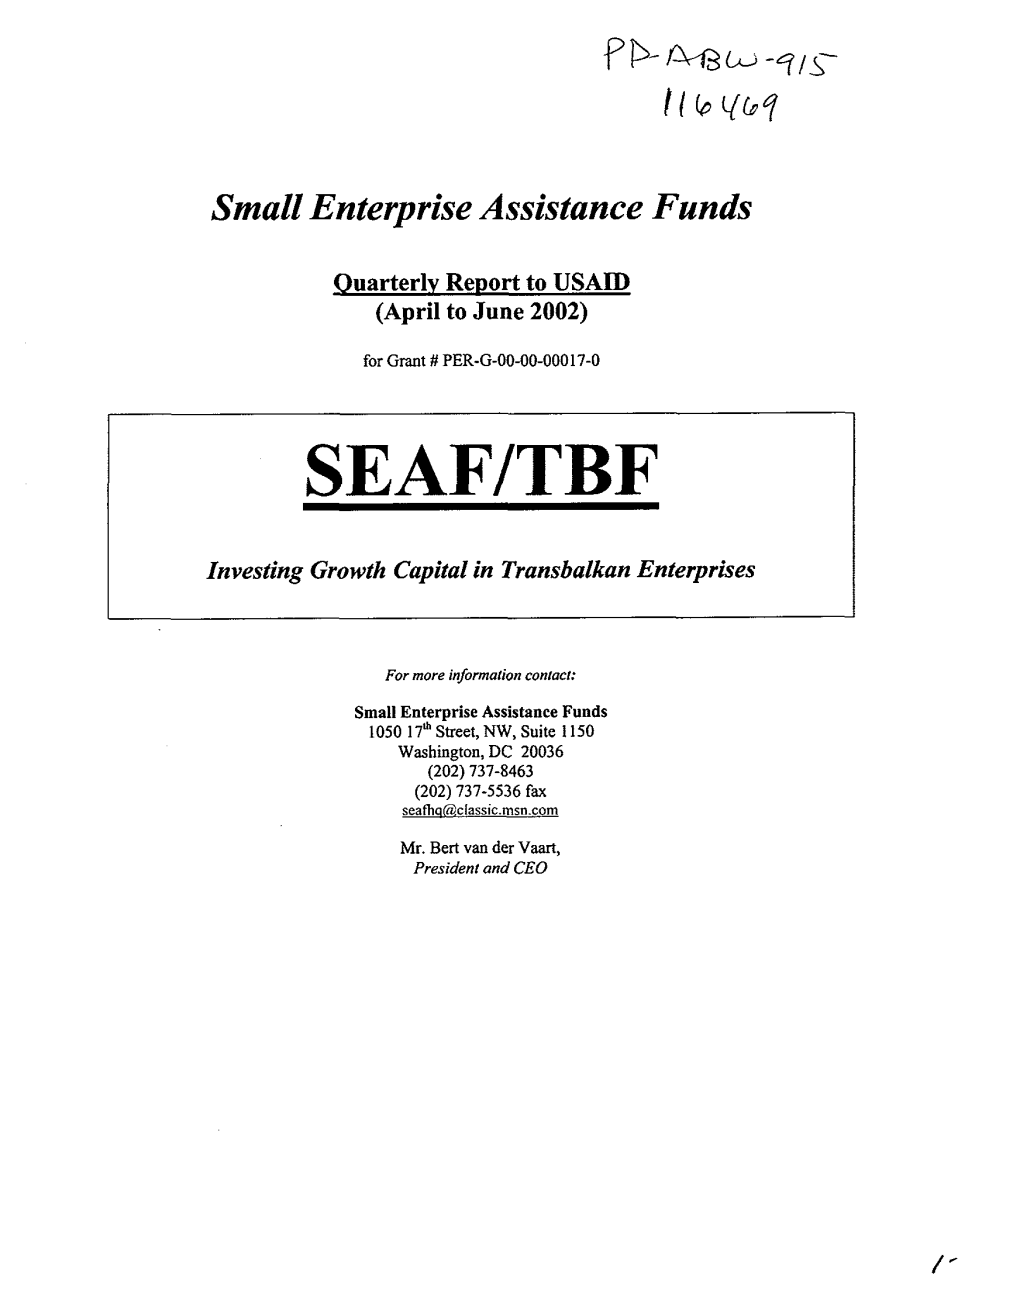 Small Enterprise Assistance Funds